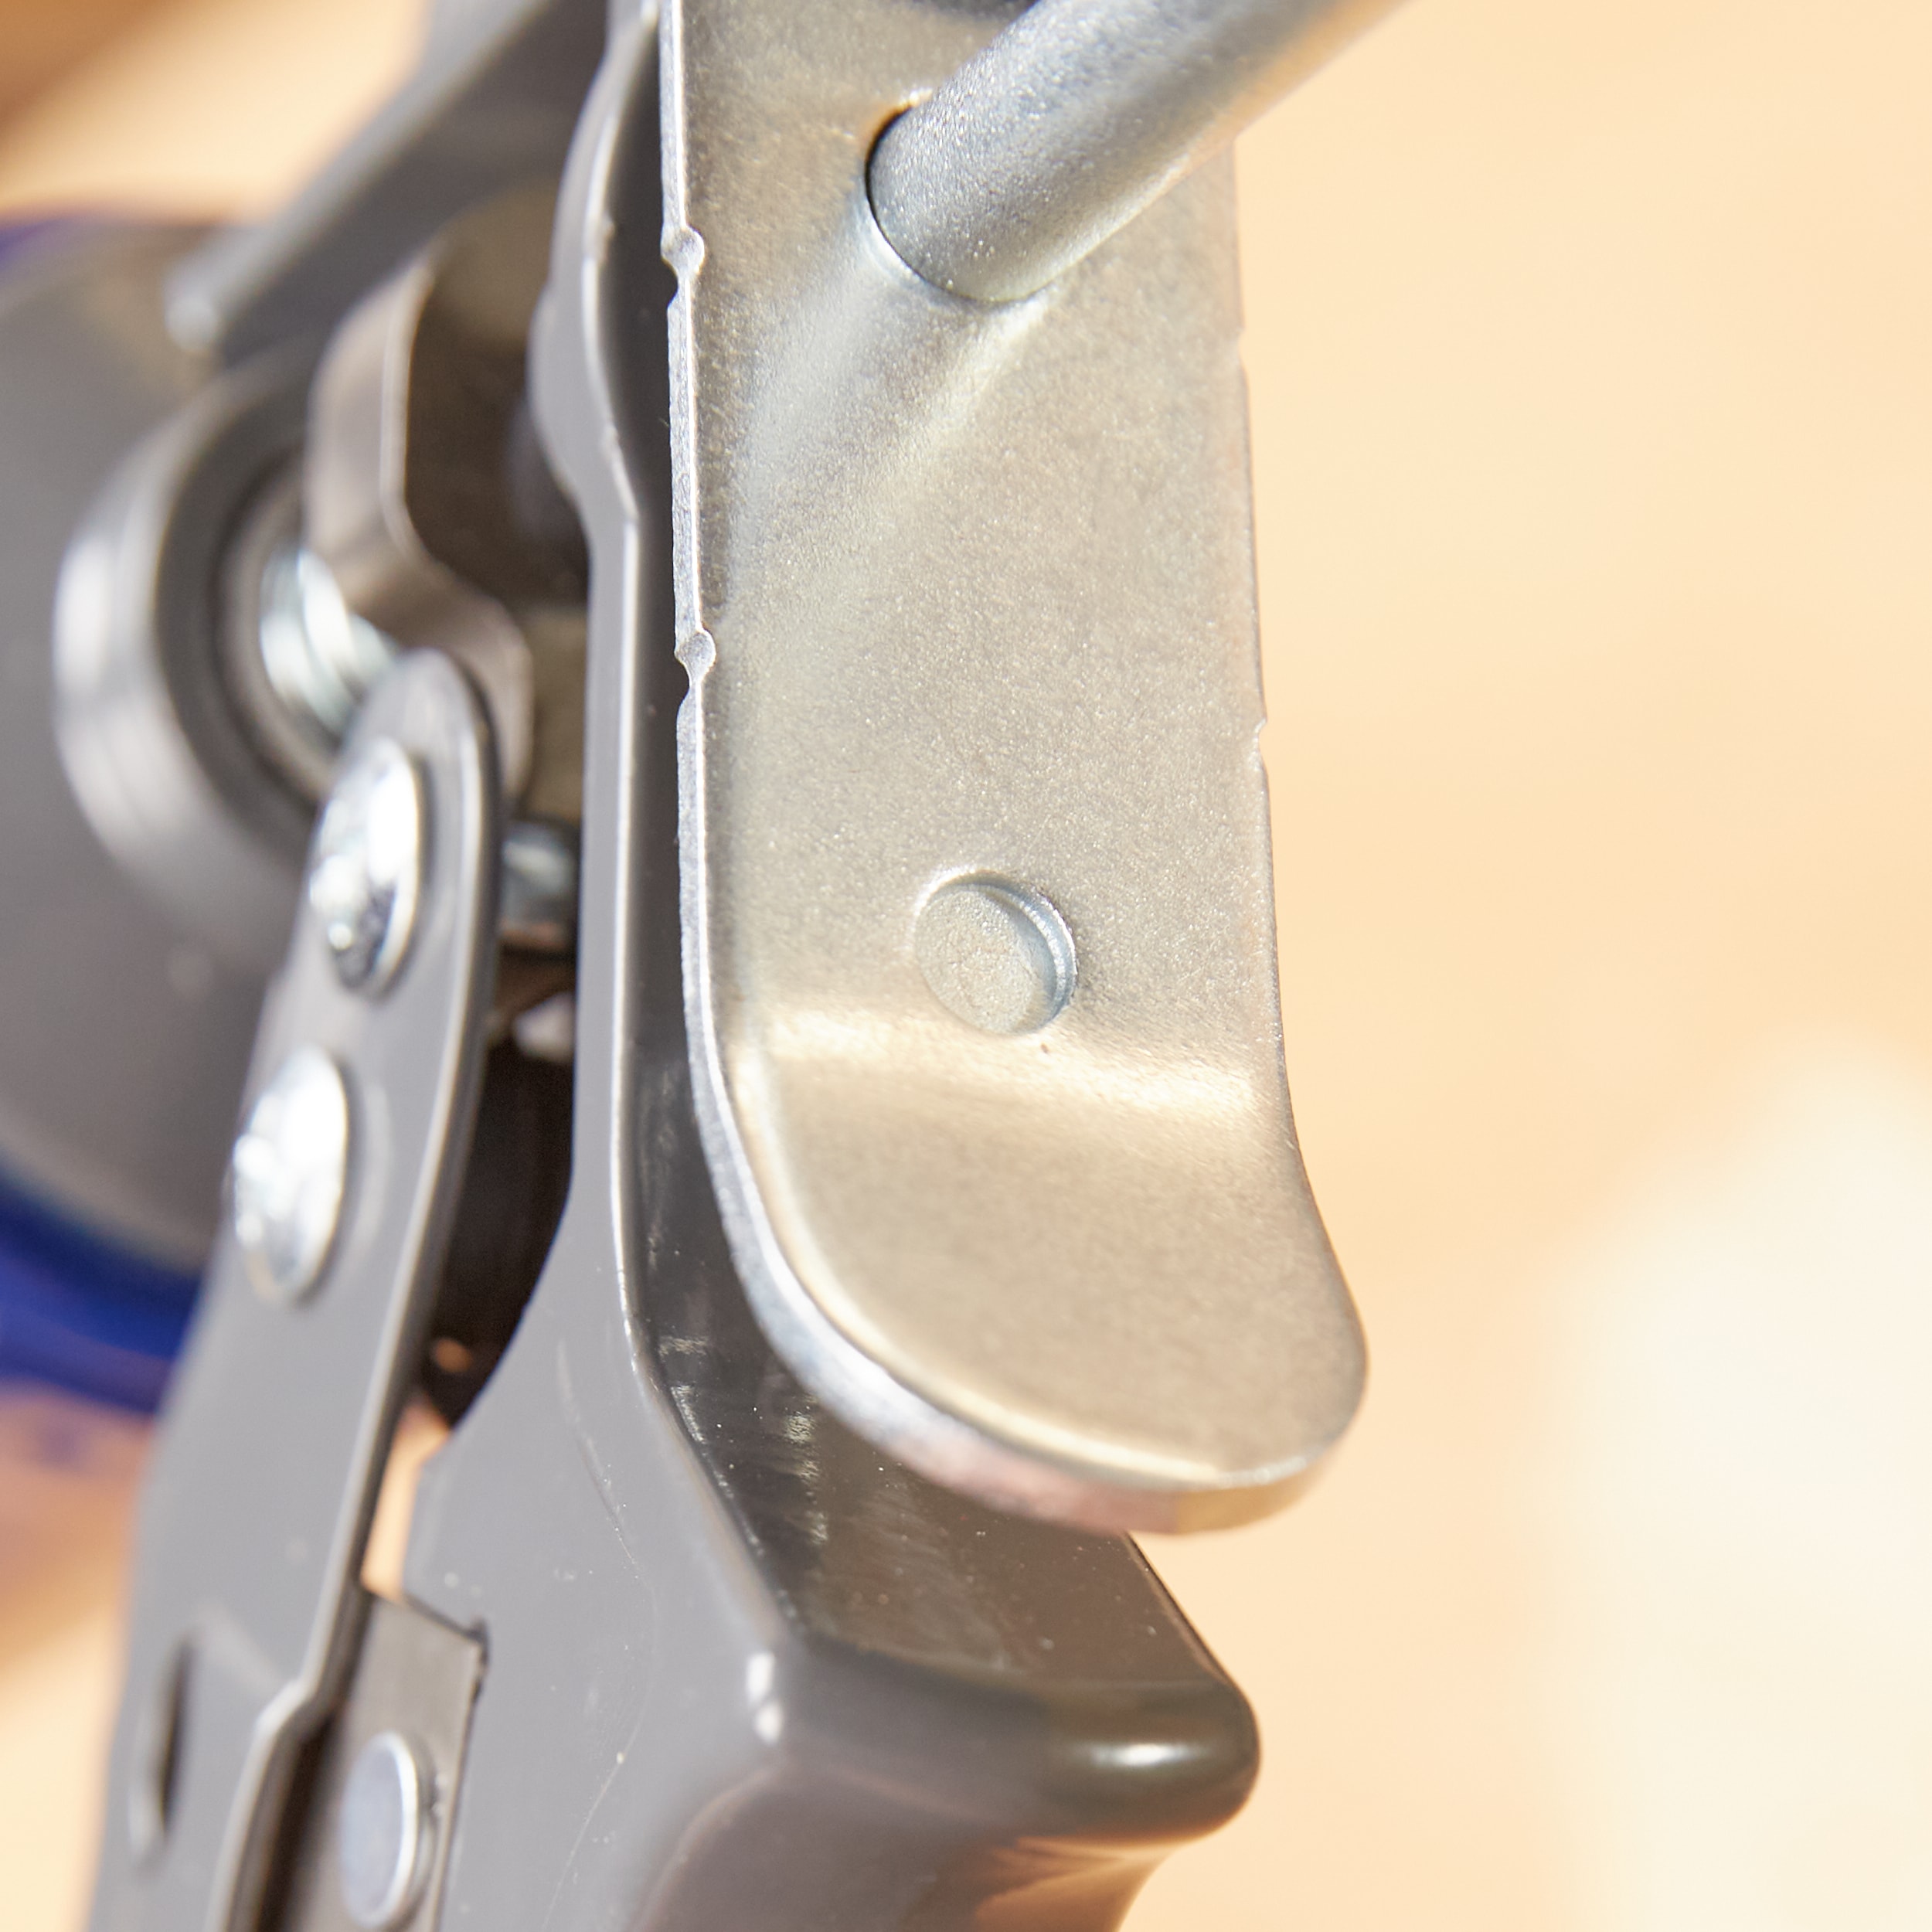 Caulk Gun,Silicone Sealant Caulk Gun for Caulking/Filling/Sealing,Trigger  Comfort Grip and Smooth Rod